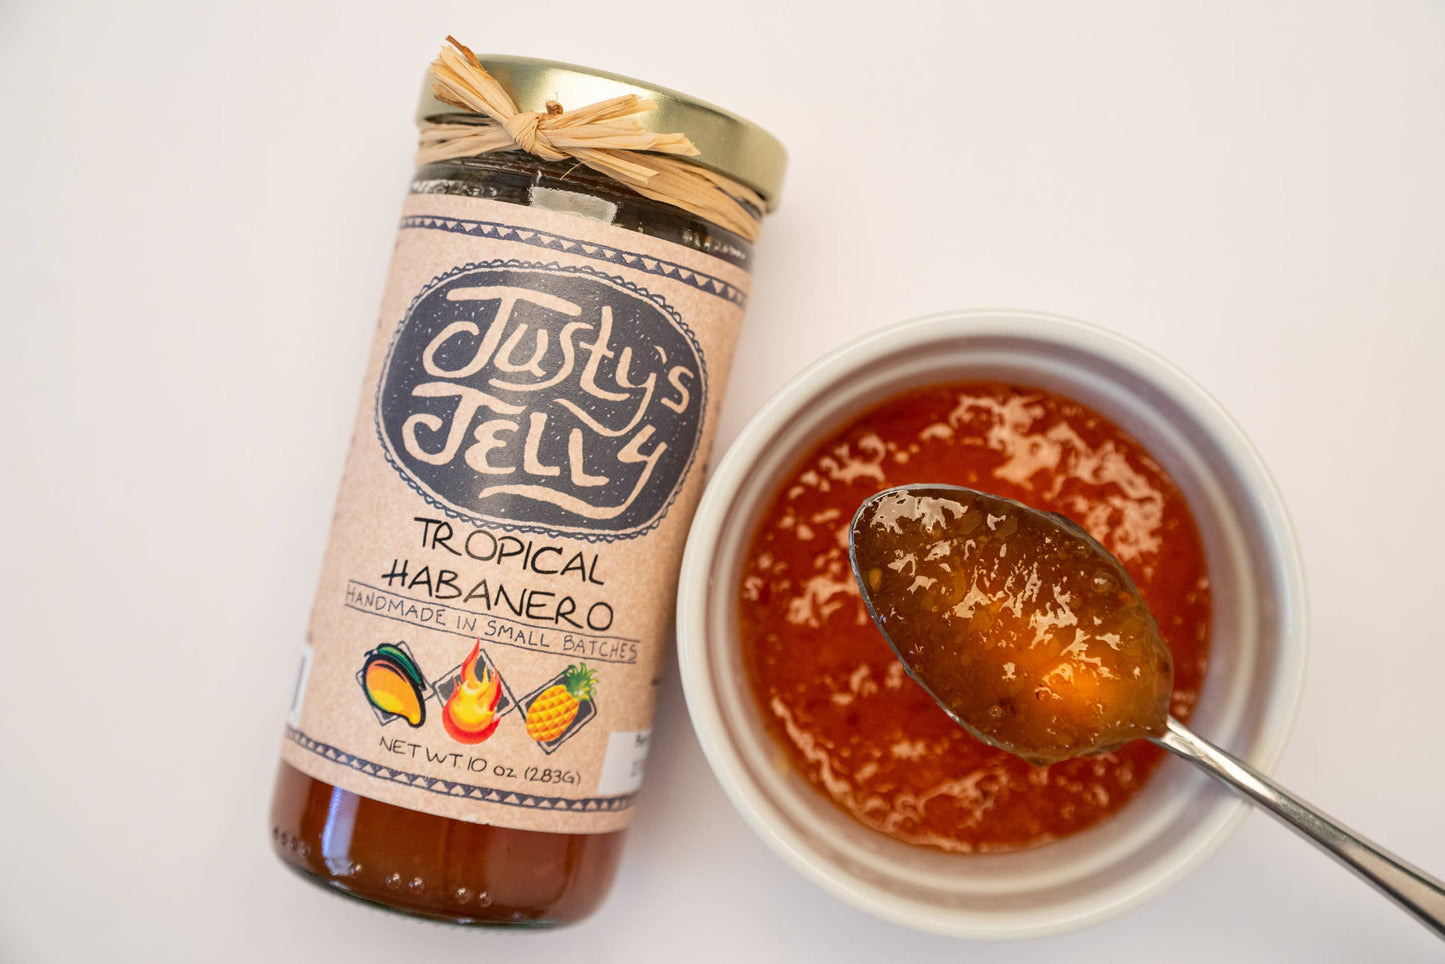 Tropical Habanero Jelly